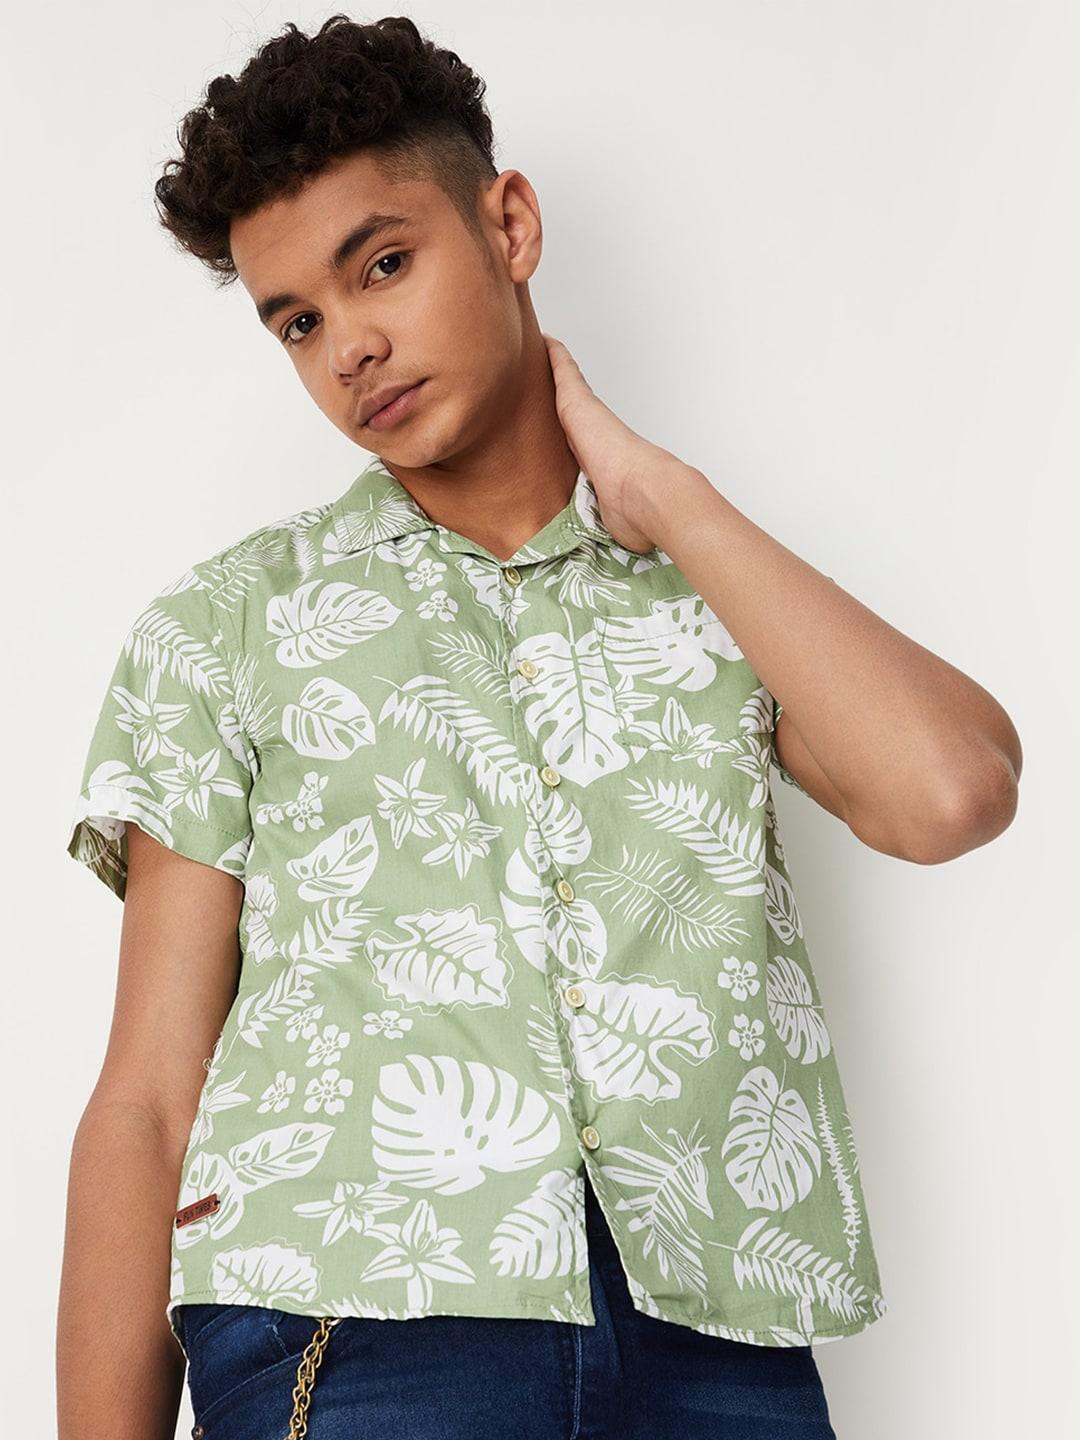 max Boys Floral Printed Cotton Casual Shirt